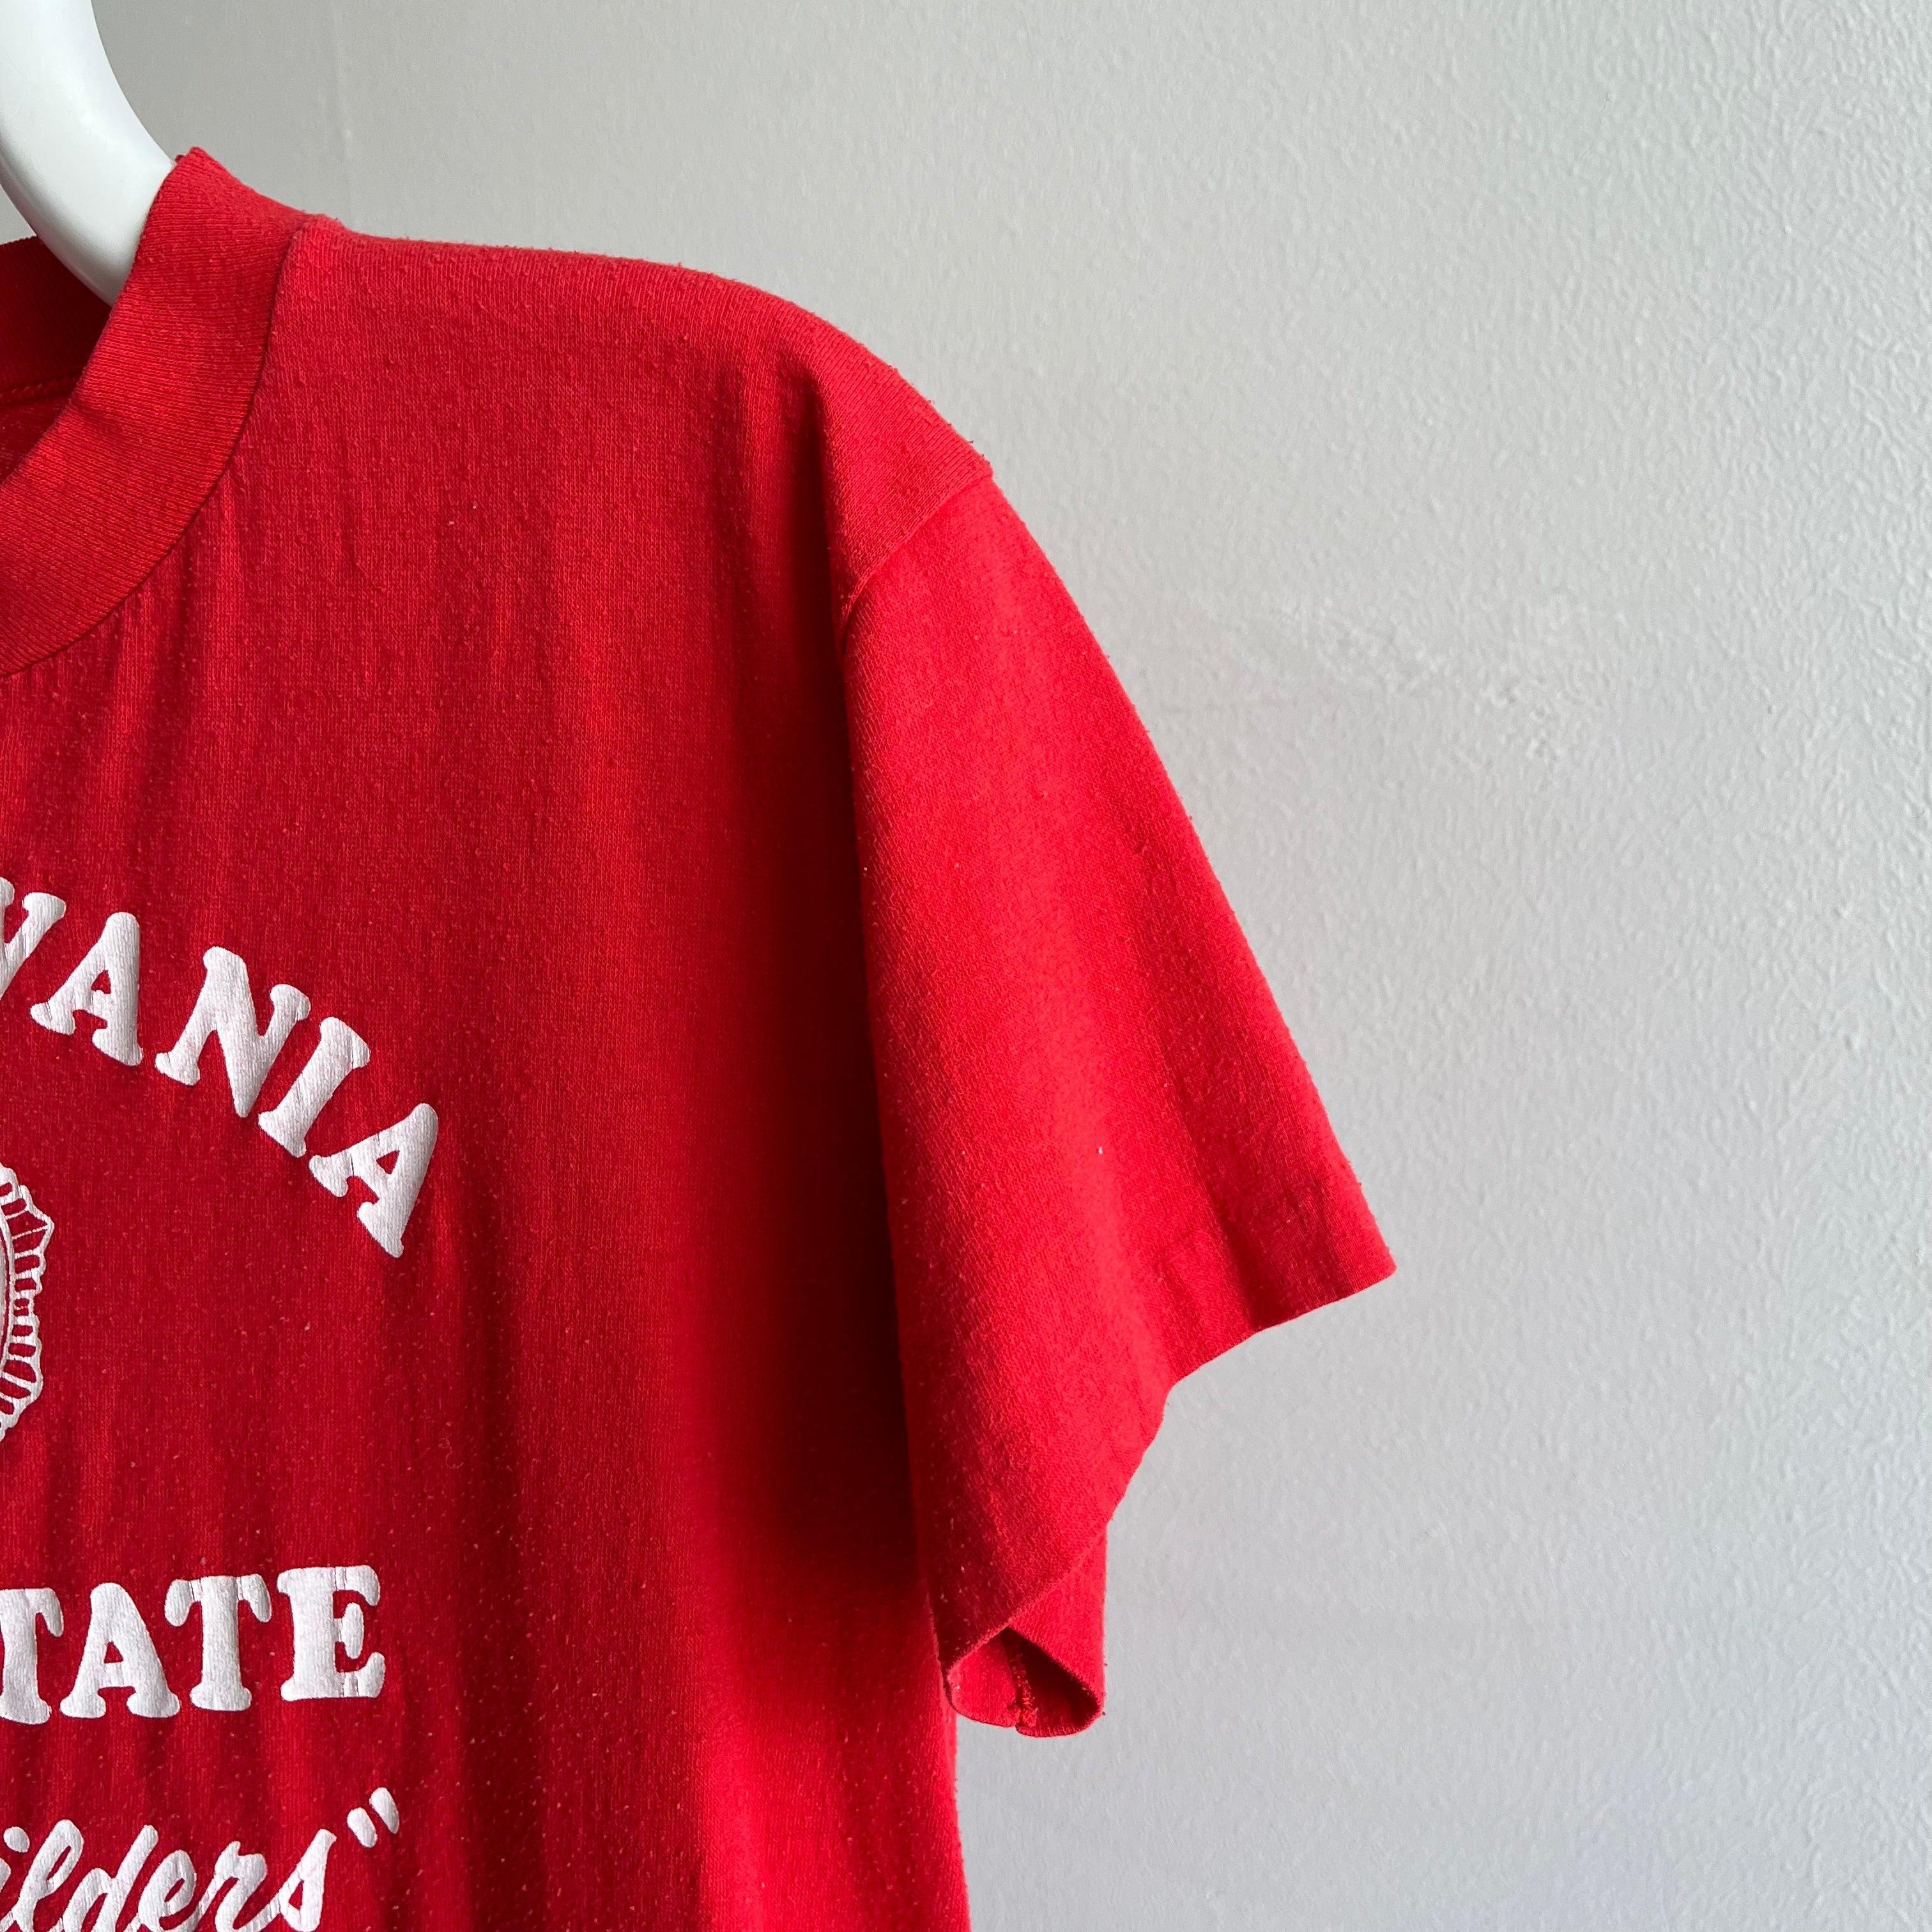 1970s Girls State - Pennsylvania T-Shirt !!!